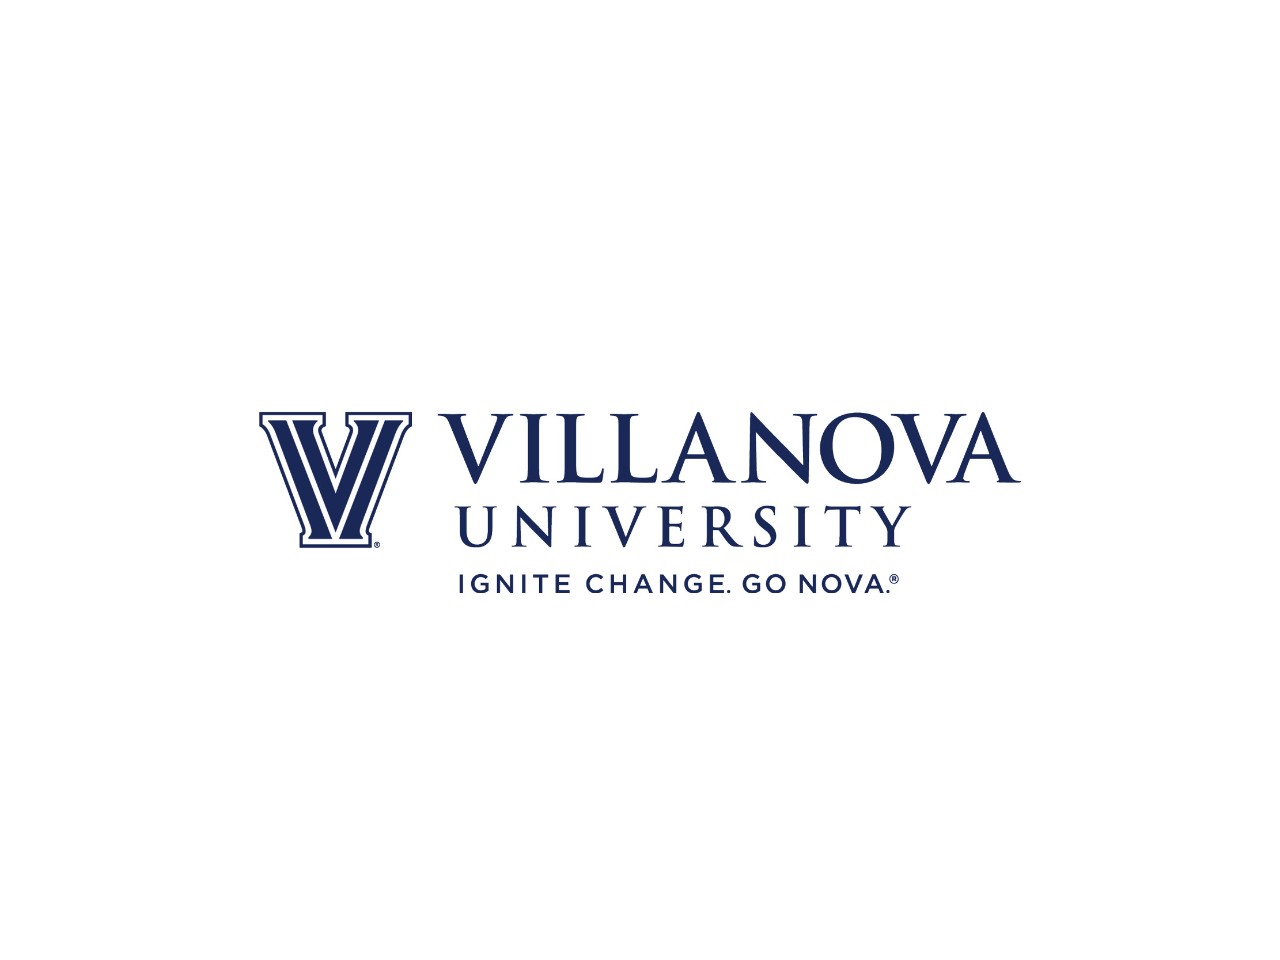 University-level Logos